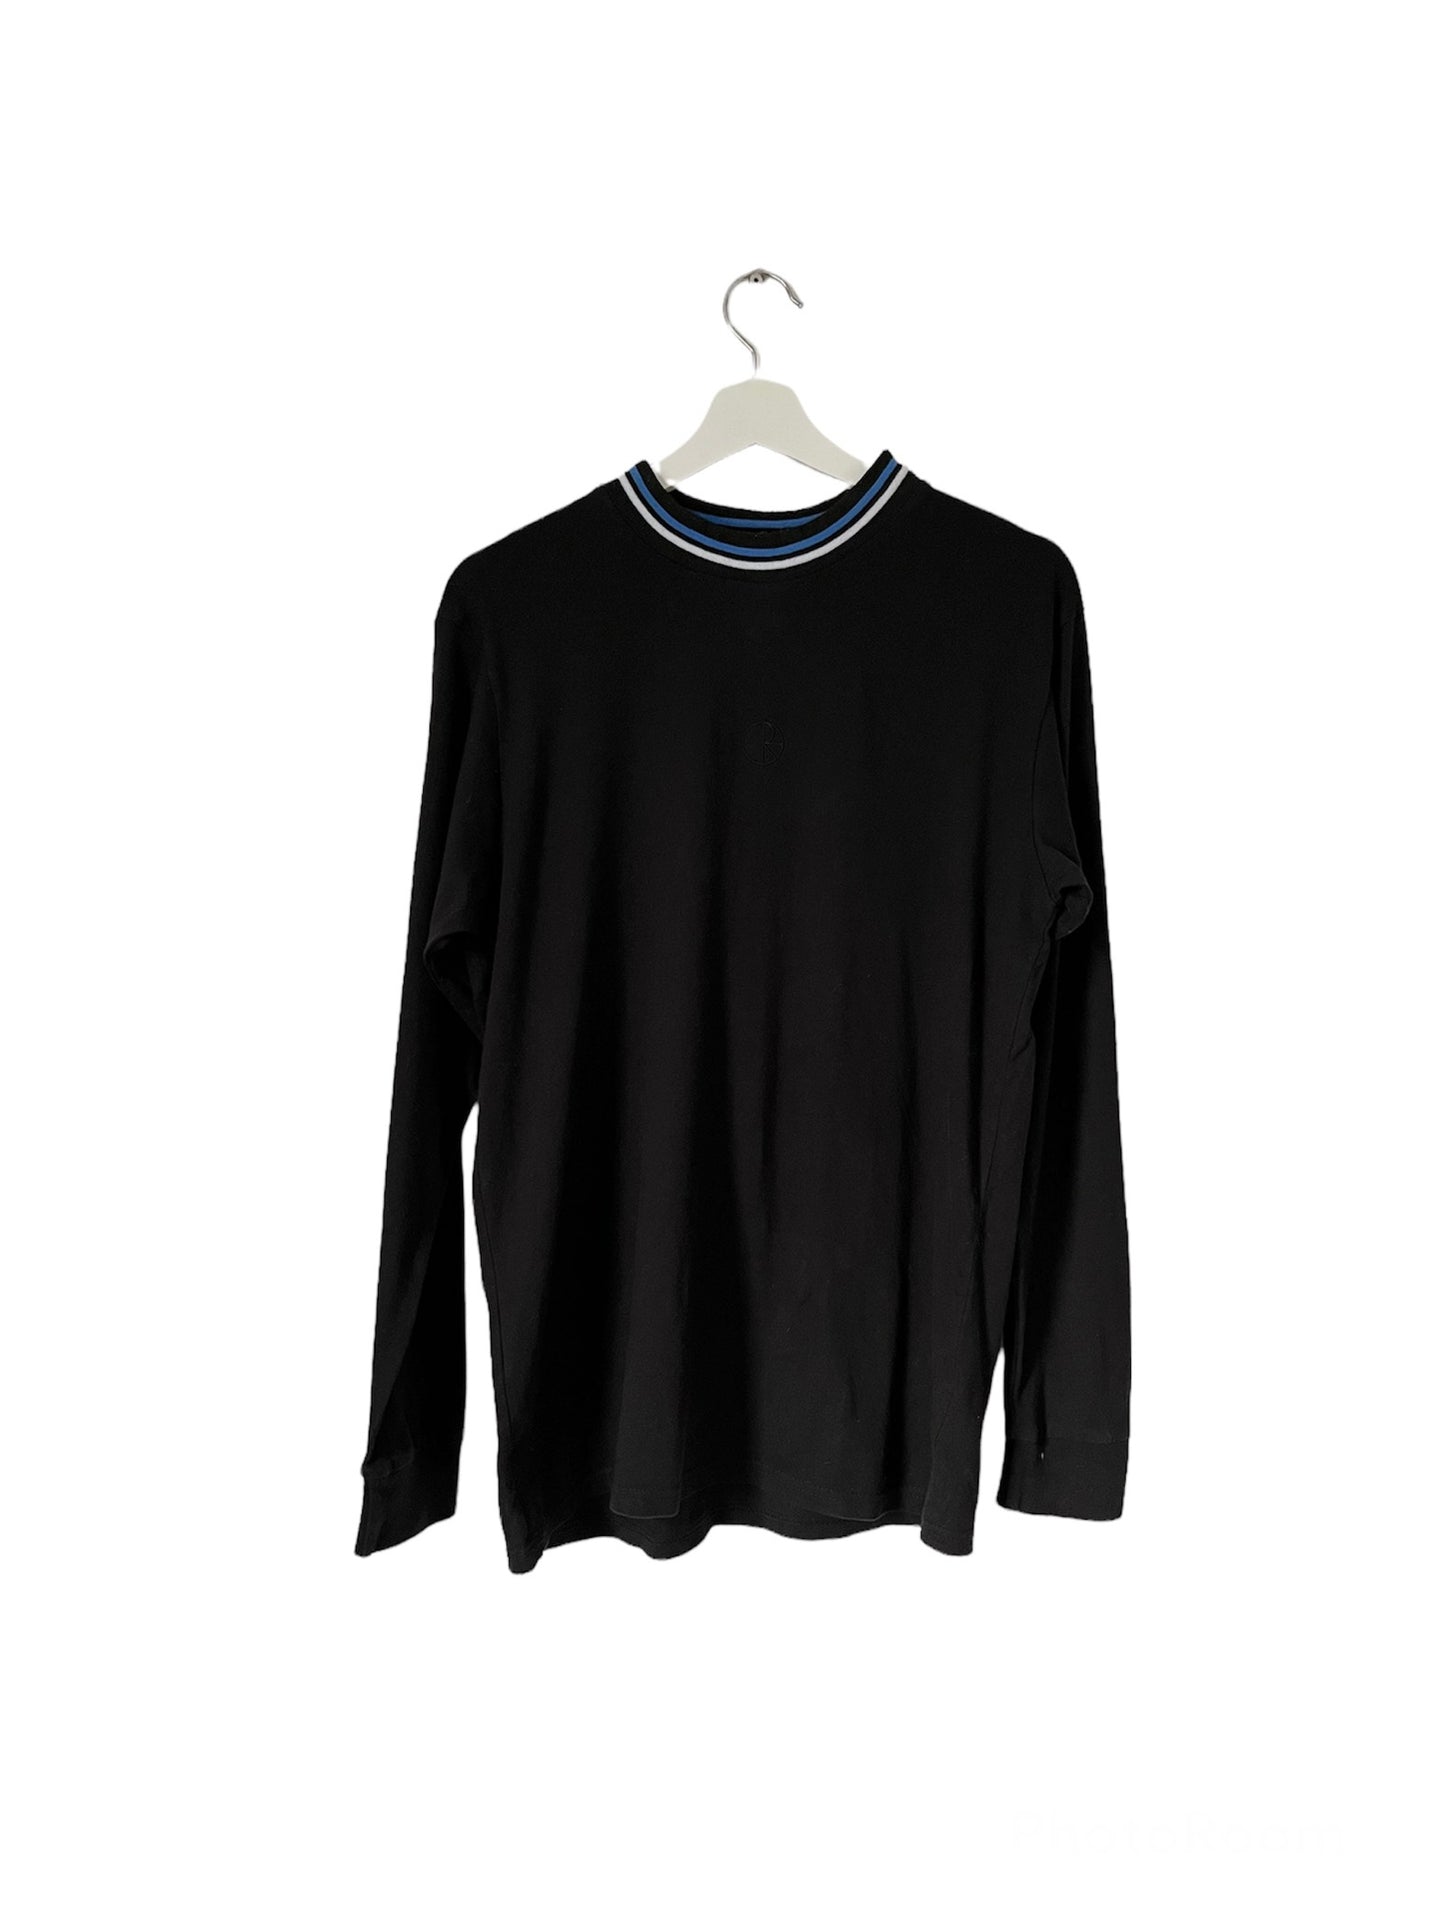 Polar Skate Co Ribbed Neck L/S T Shirt Black - Medium